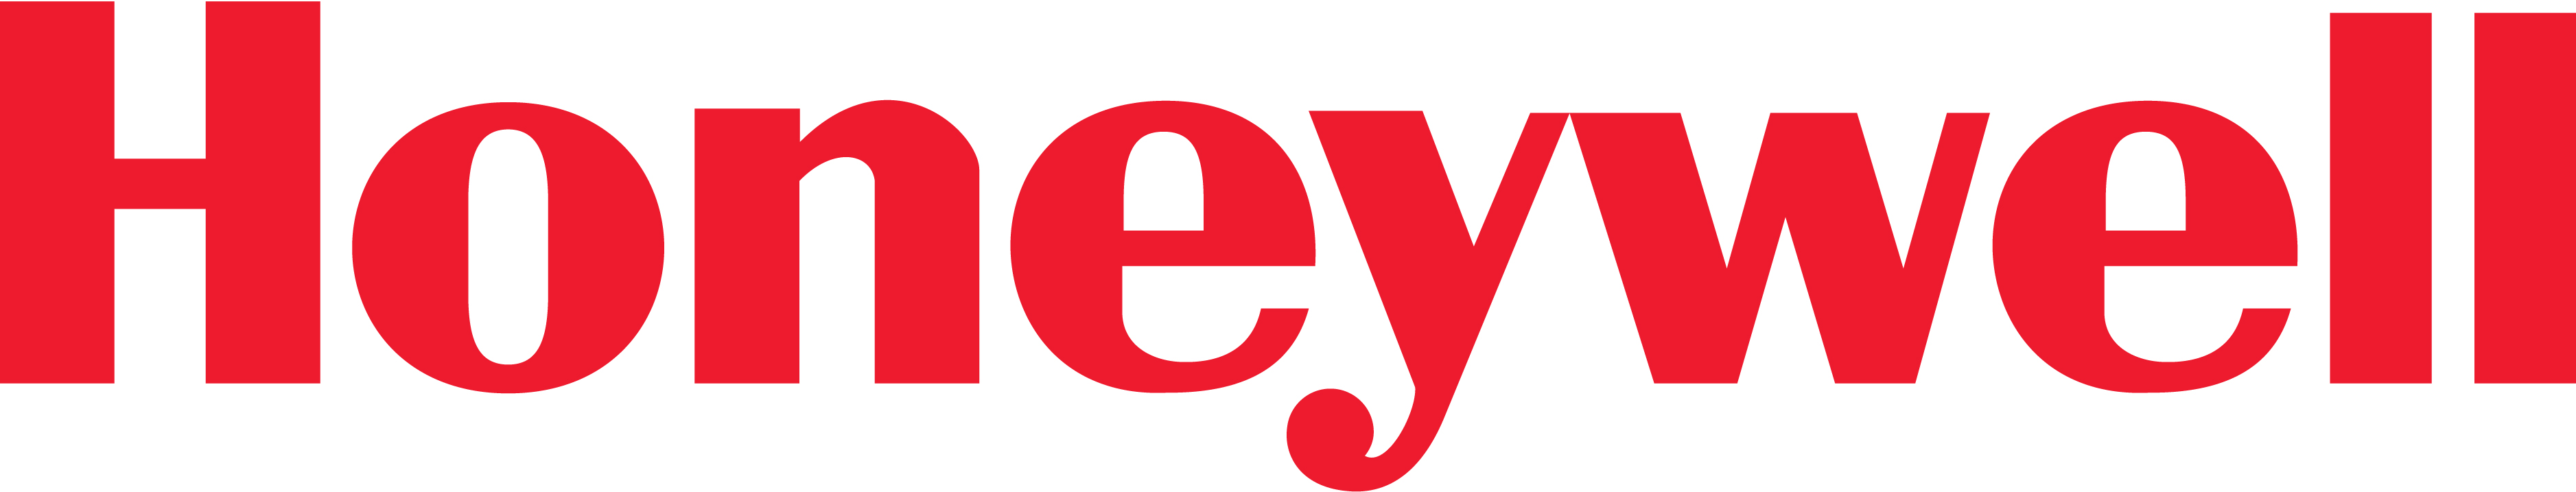 honeywell-logo-jpg